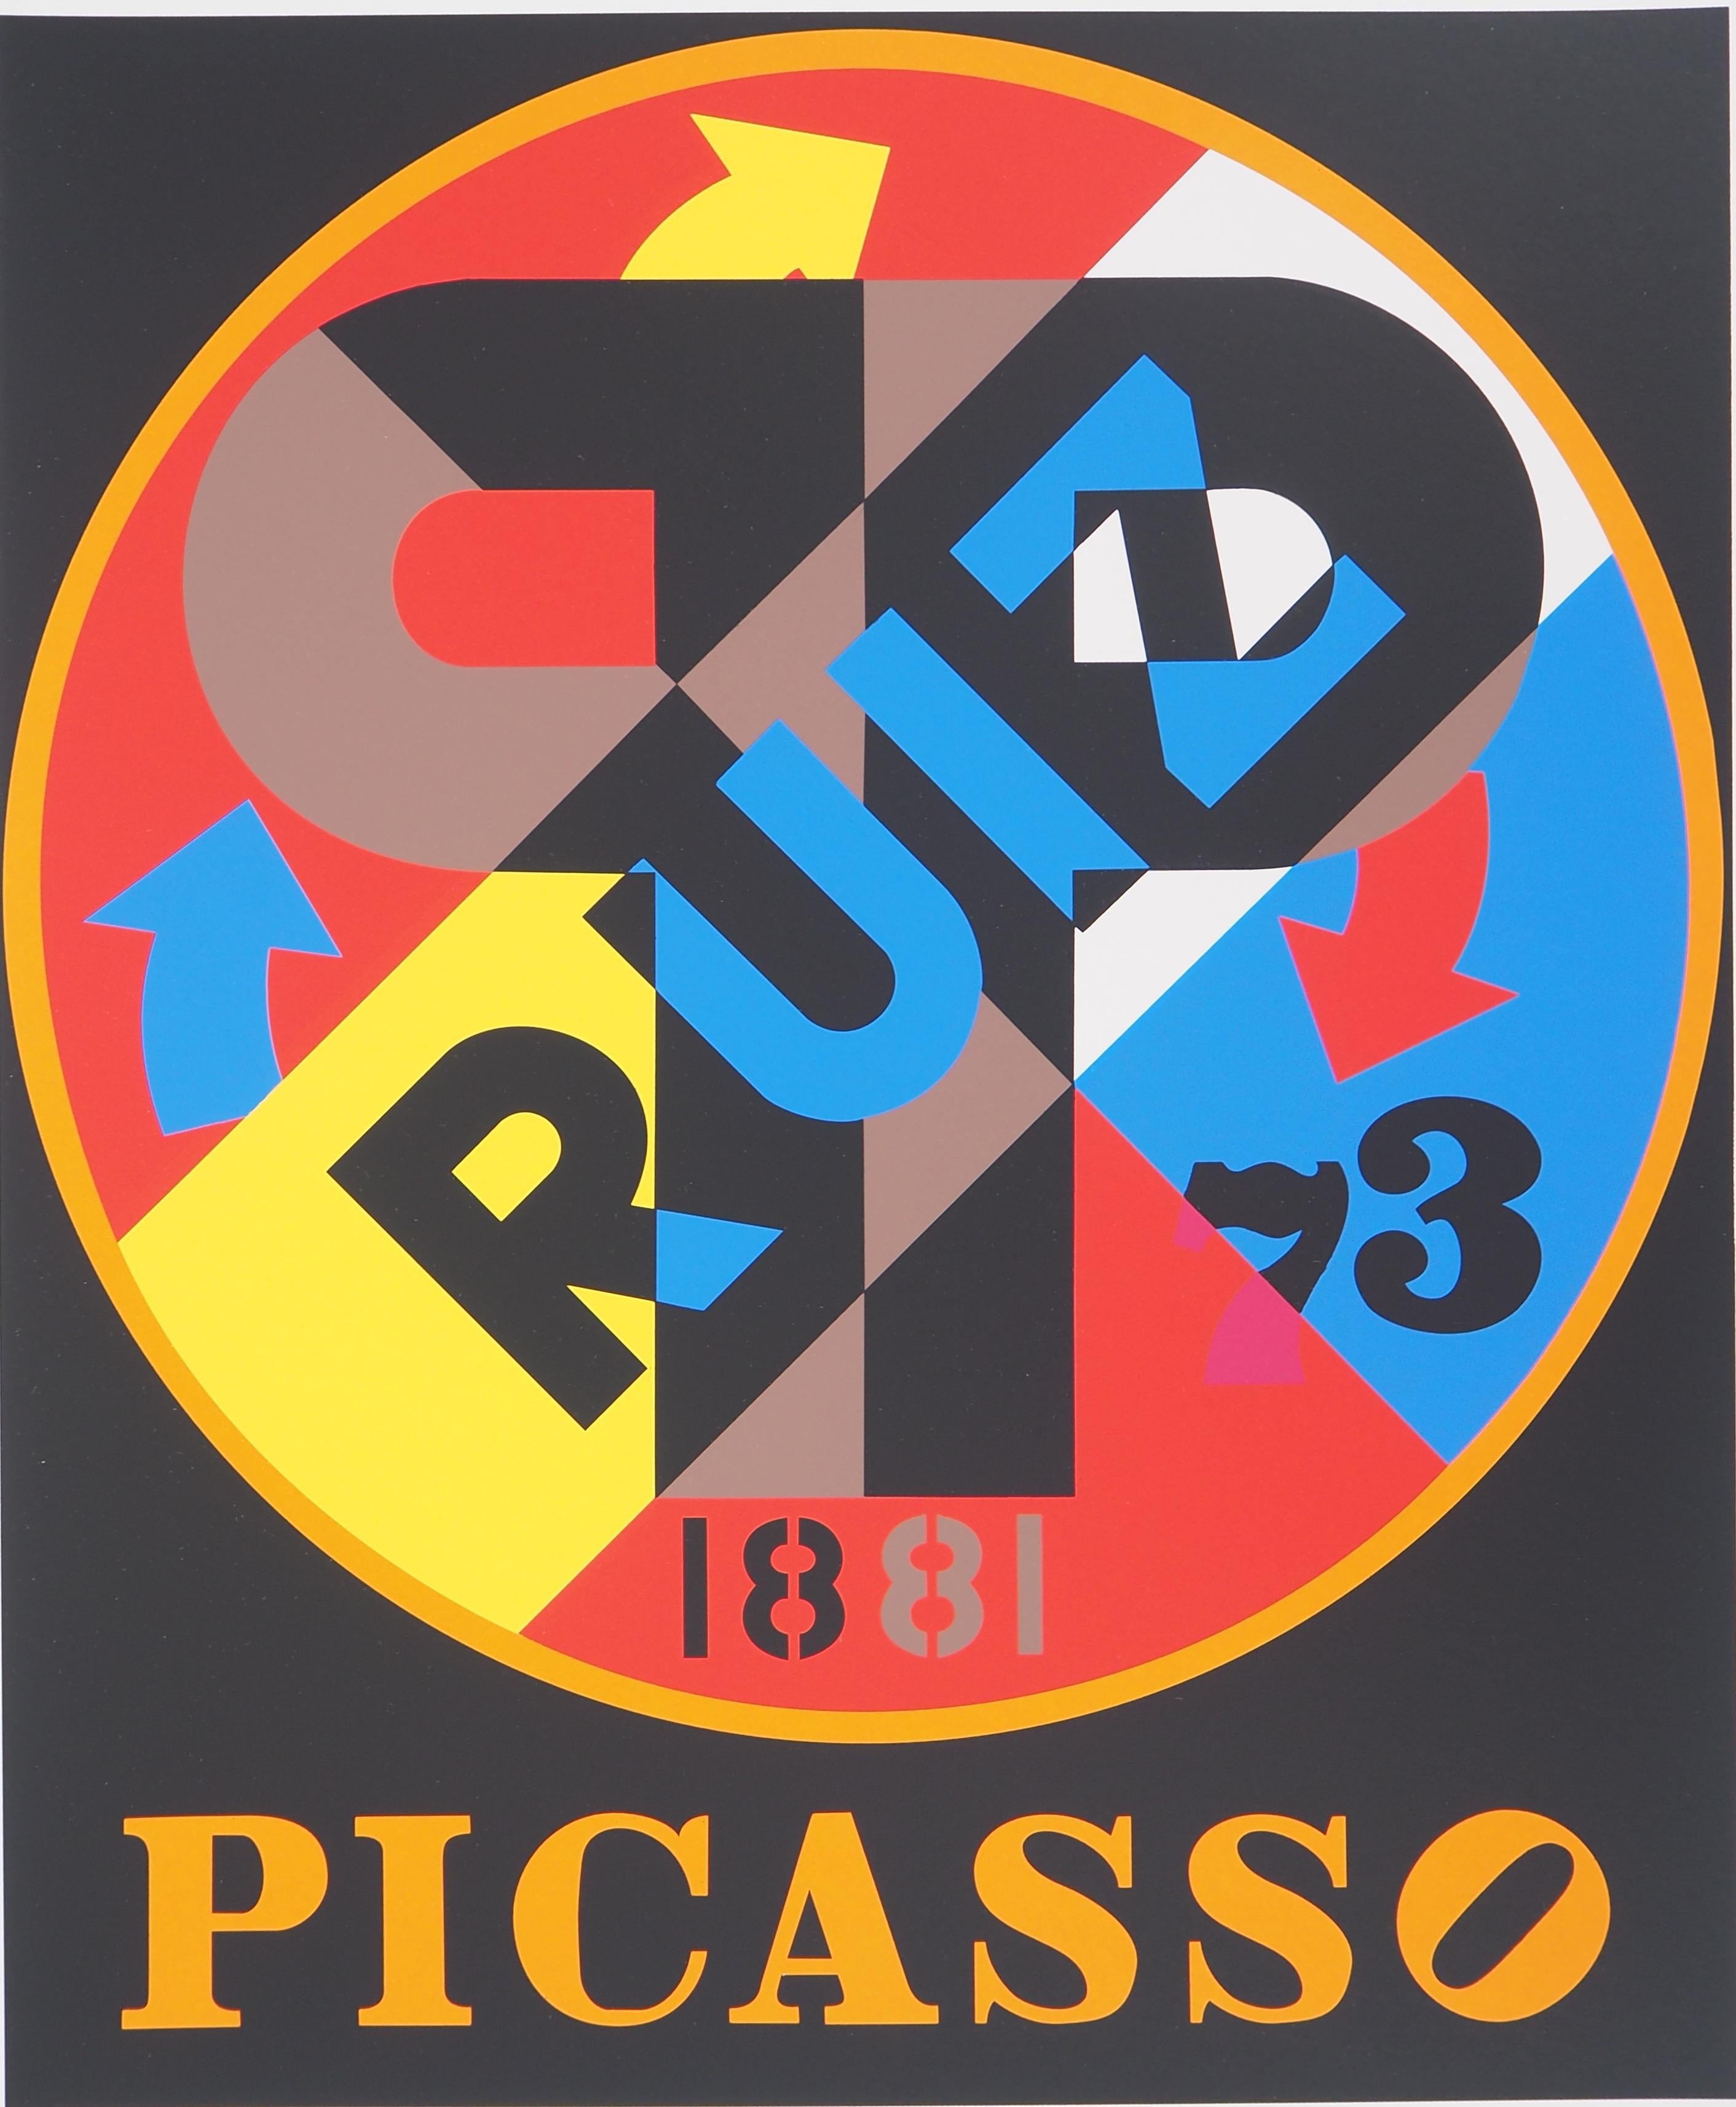 Picasso - Original screenprint, Handsigned - Certificate - American Modern Print by Robert Indiana